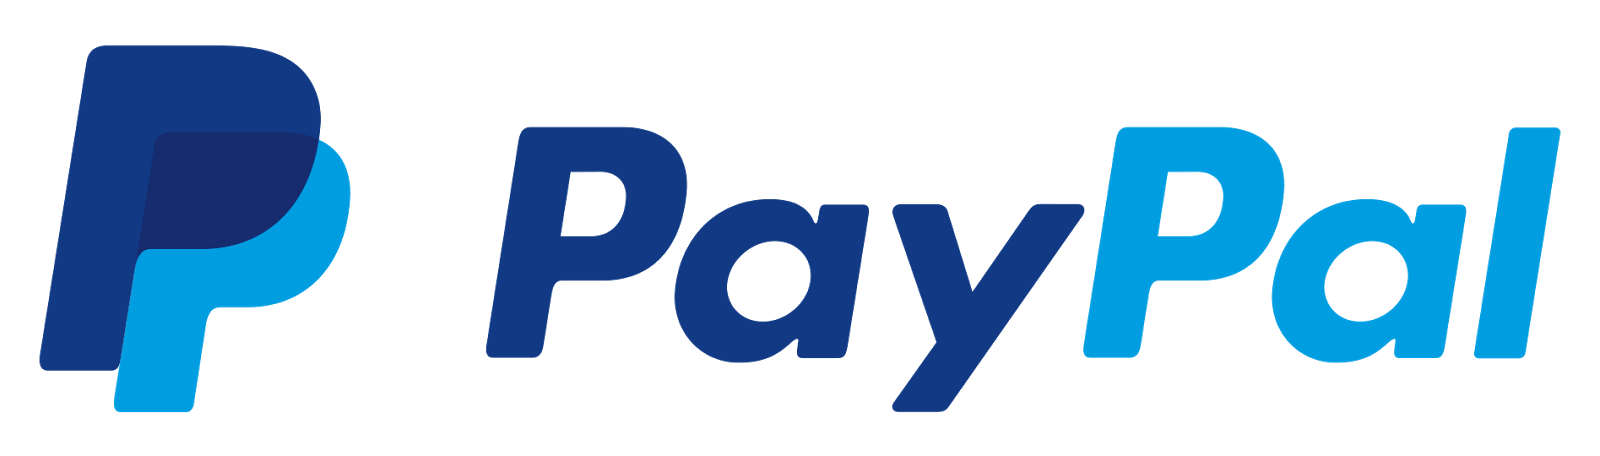 High Quality Paypal logo Blank Meme Template